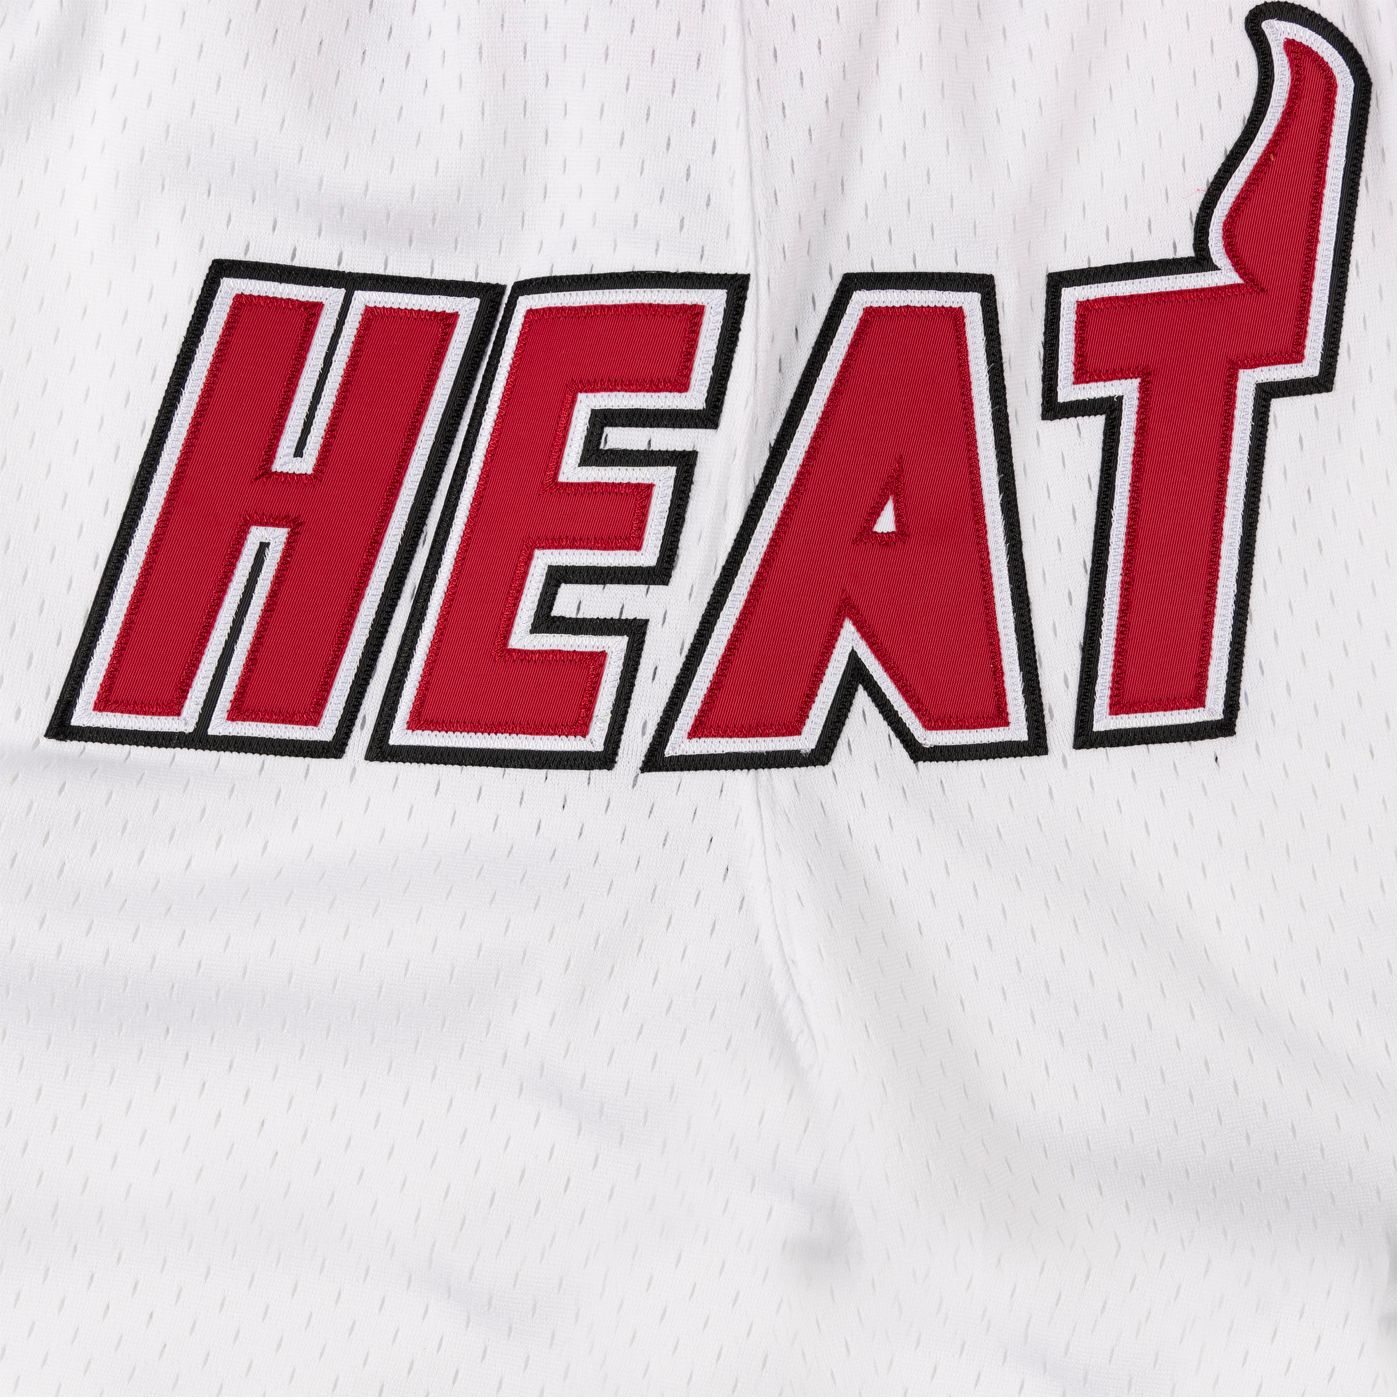 Miami Heat Vice City Edition Black Just Don Shorts - Rare Basketball Jerseys